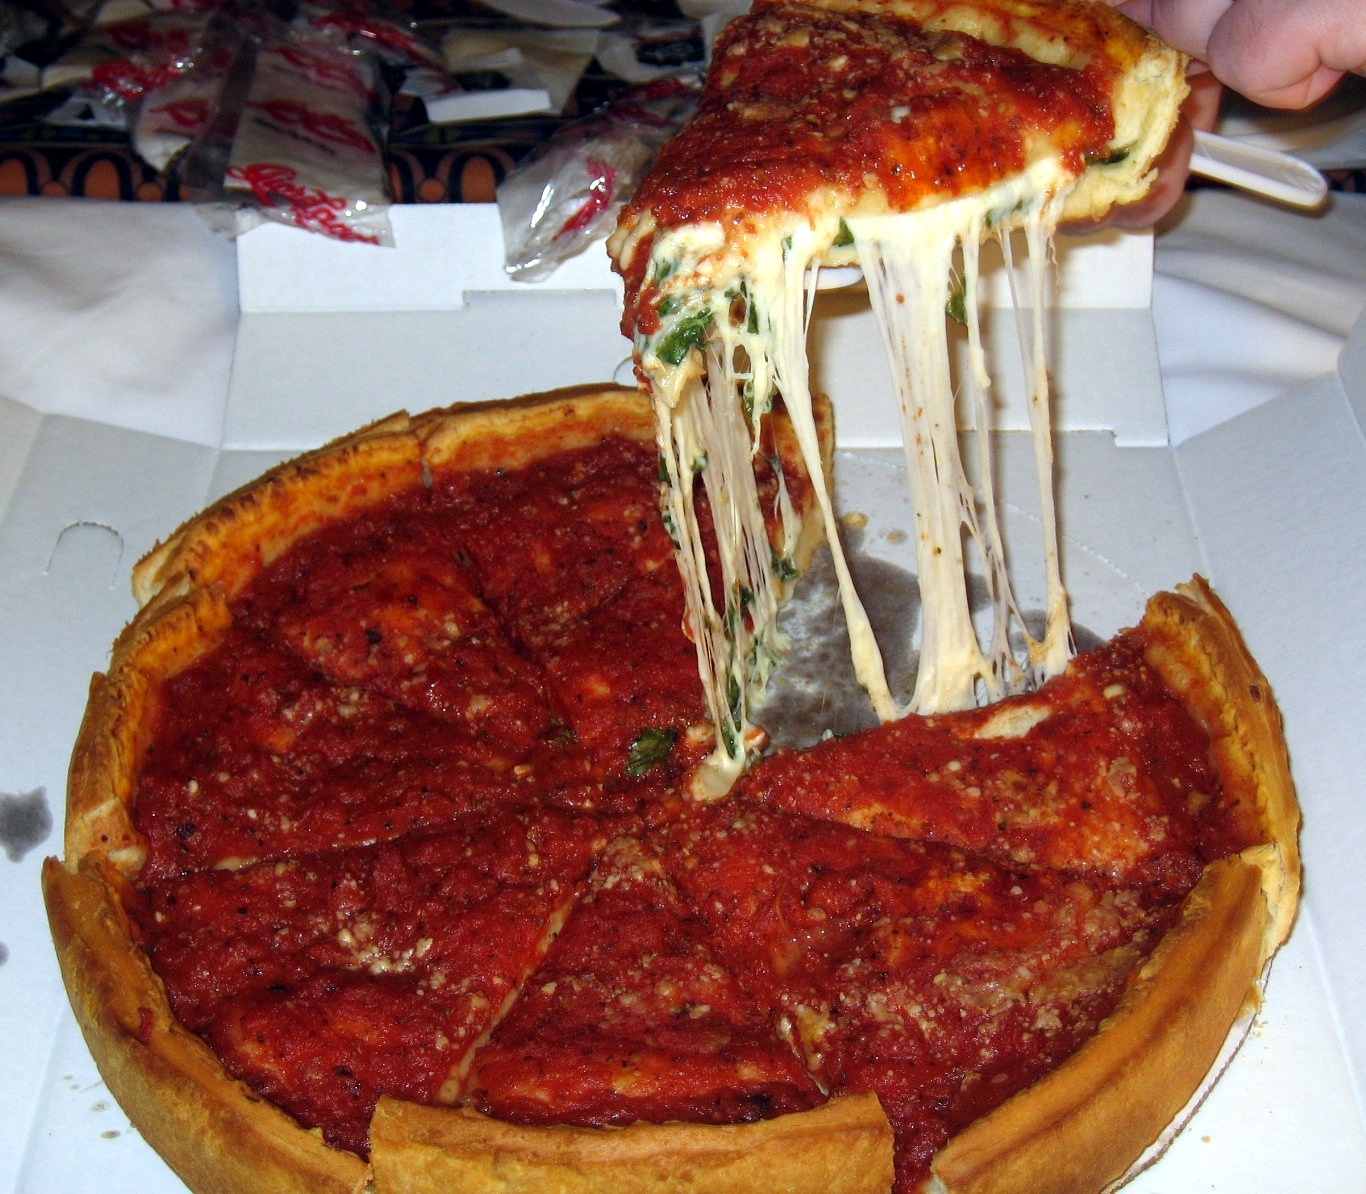 http://upload.wikimedia.org/wikipedia/commons/4/4b/Giordano%27s_Deep_Dish_Pizza.jpg